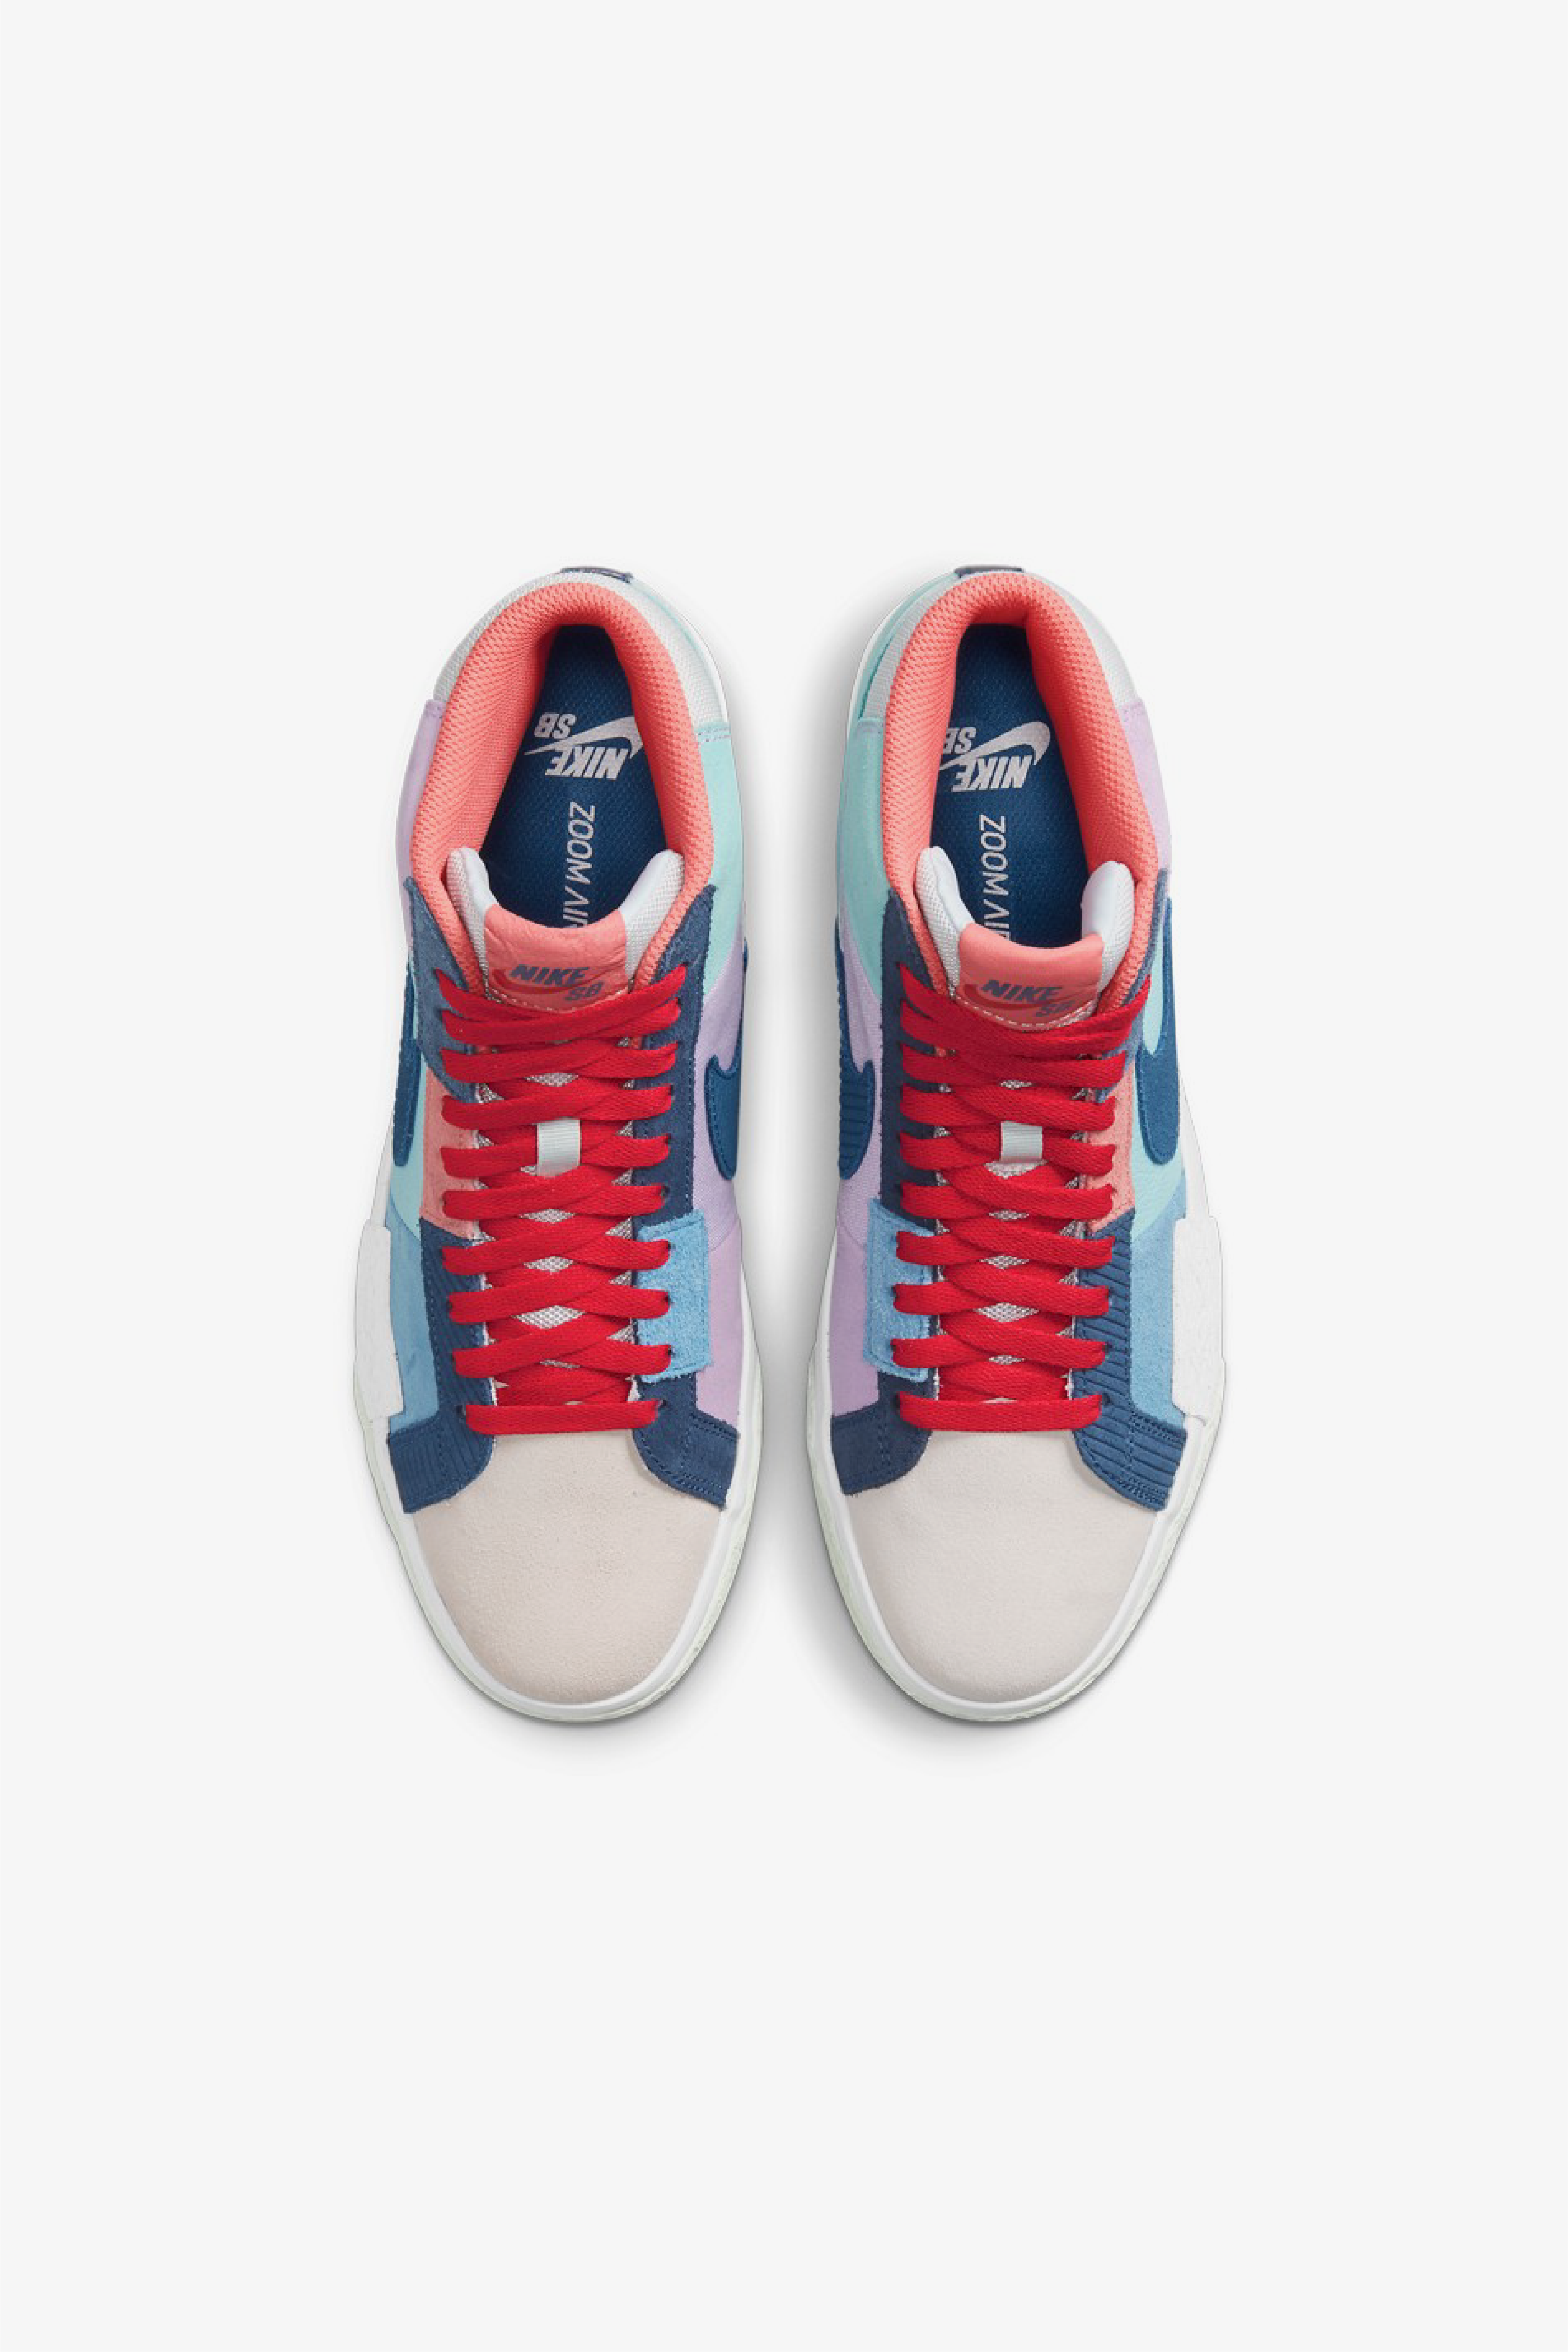 Selectshop FRAME - NIKE SB Nike SB Zoom Blazer Mid PRM "Mosaic" Footwear Dubai